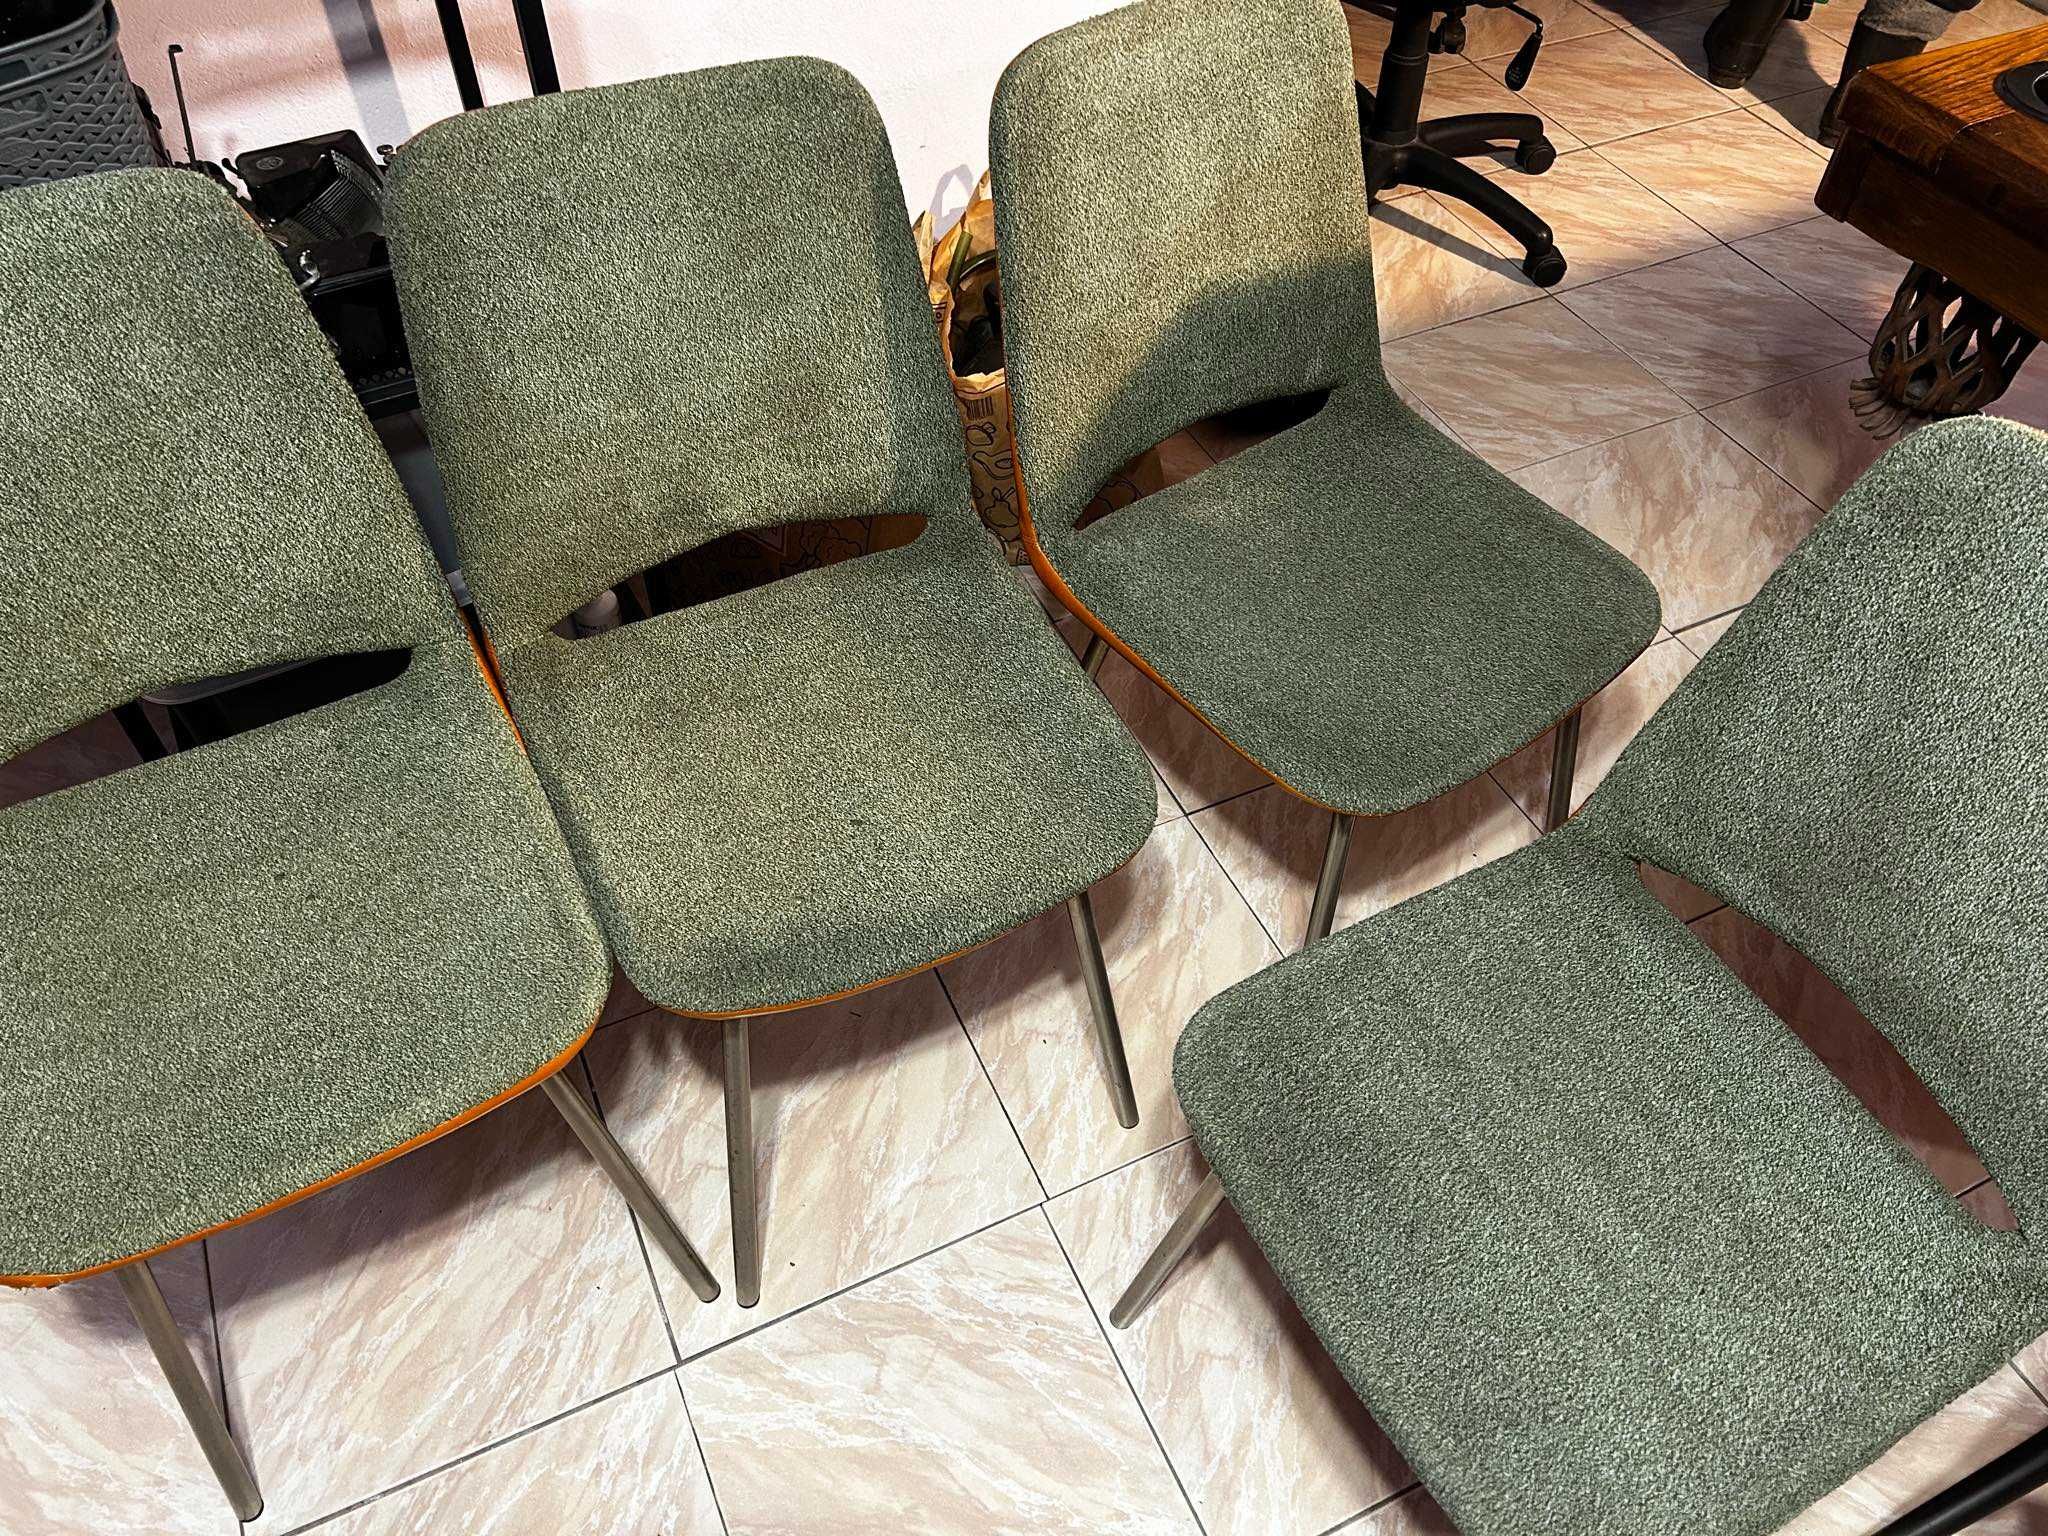 Komplet krzeseł "Meblomet" Mszana Dolna lata 70.